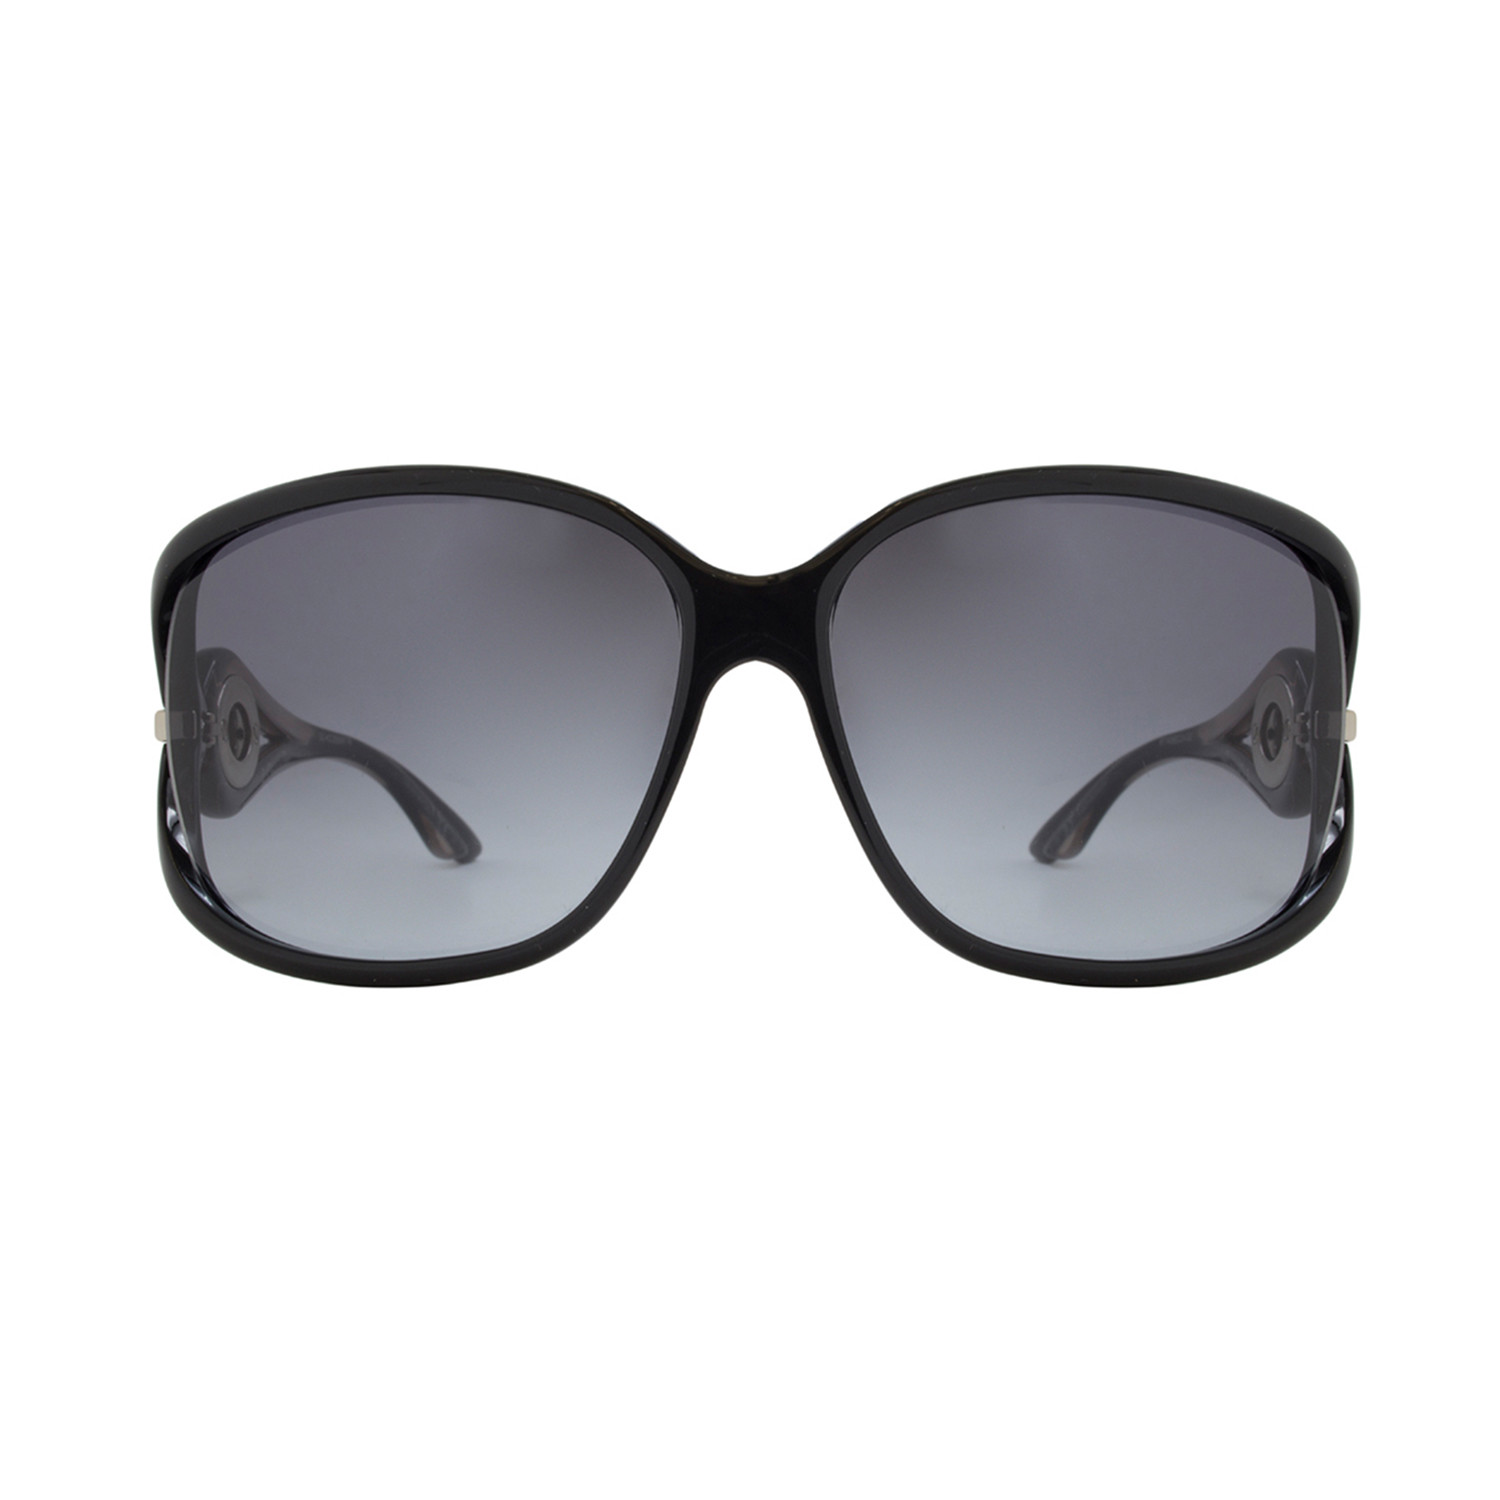 Christian Dior Women S Volute 2 Sunglasses Shiny Black Gray Designer Sunglasses Touch